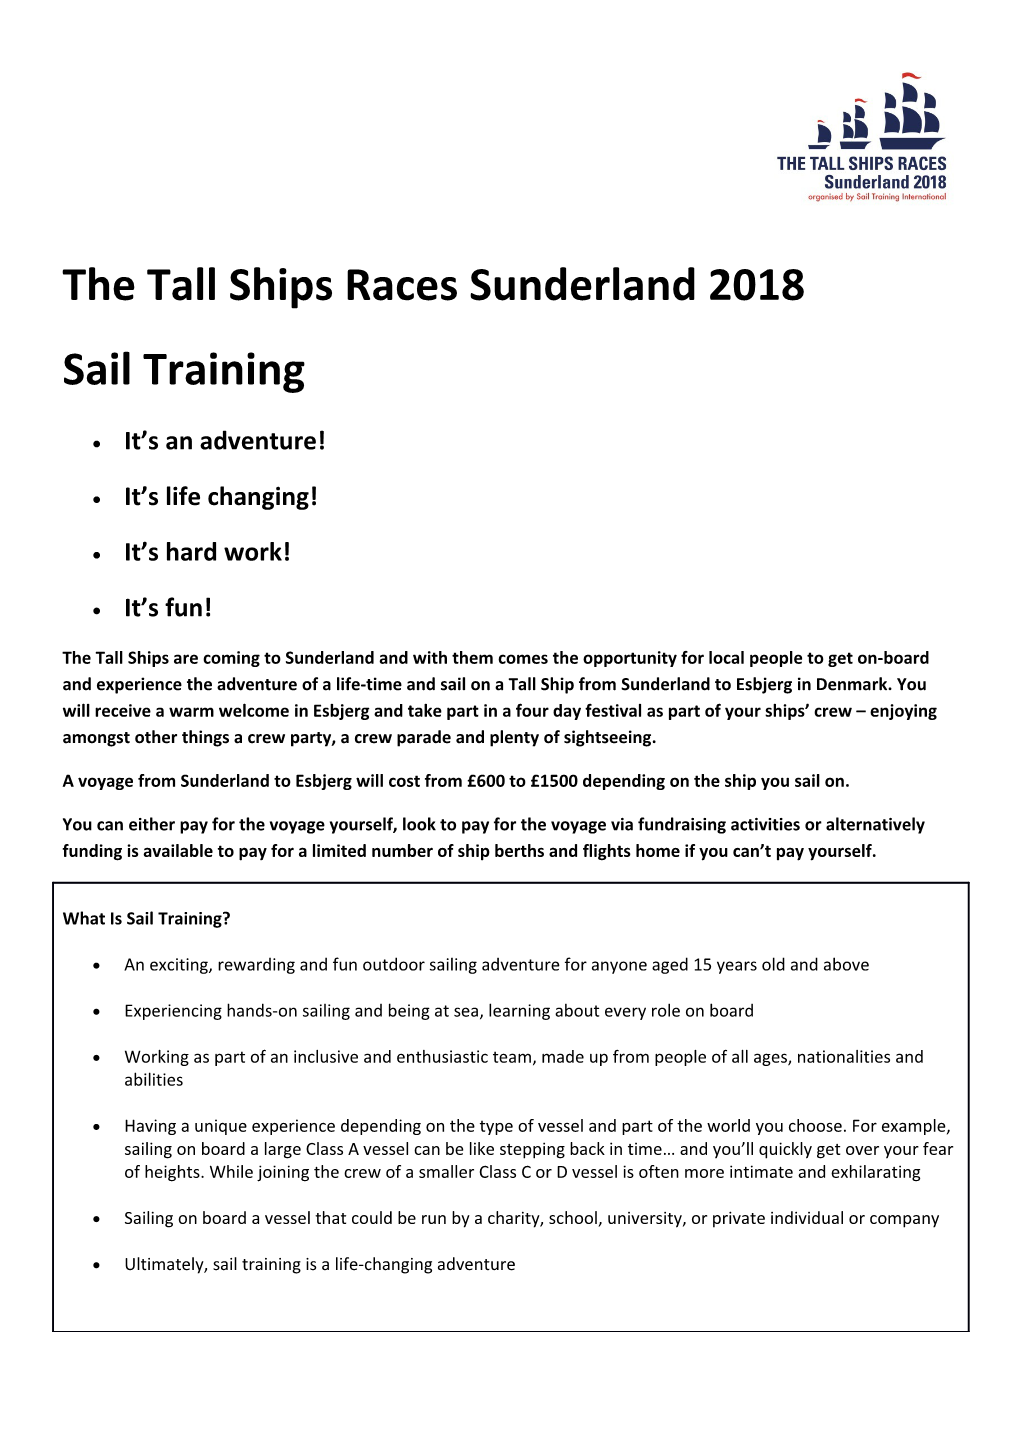 The Tall Ships Races Sunderland 2018